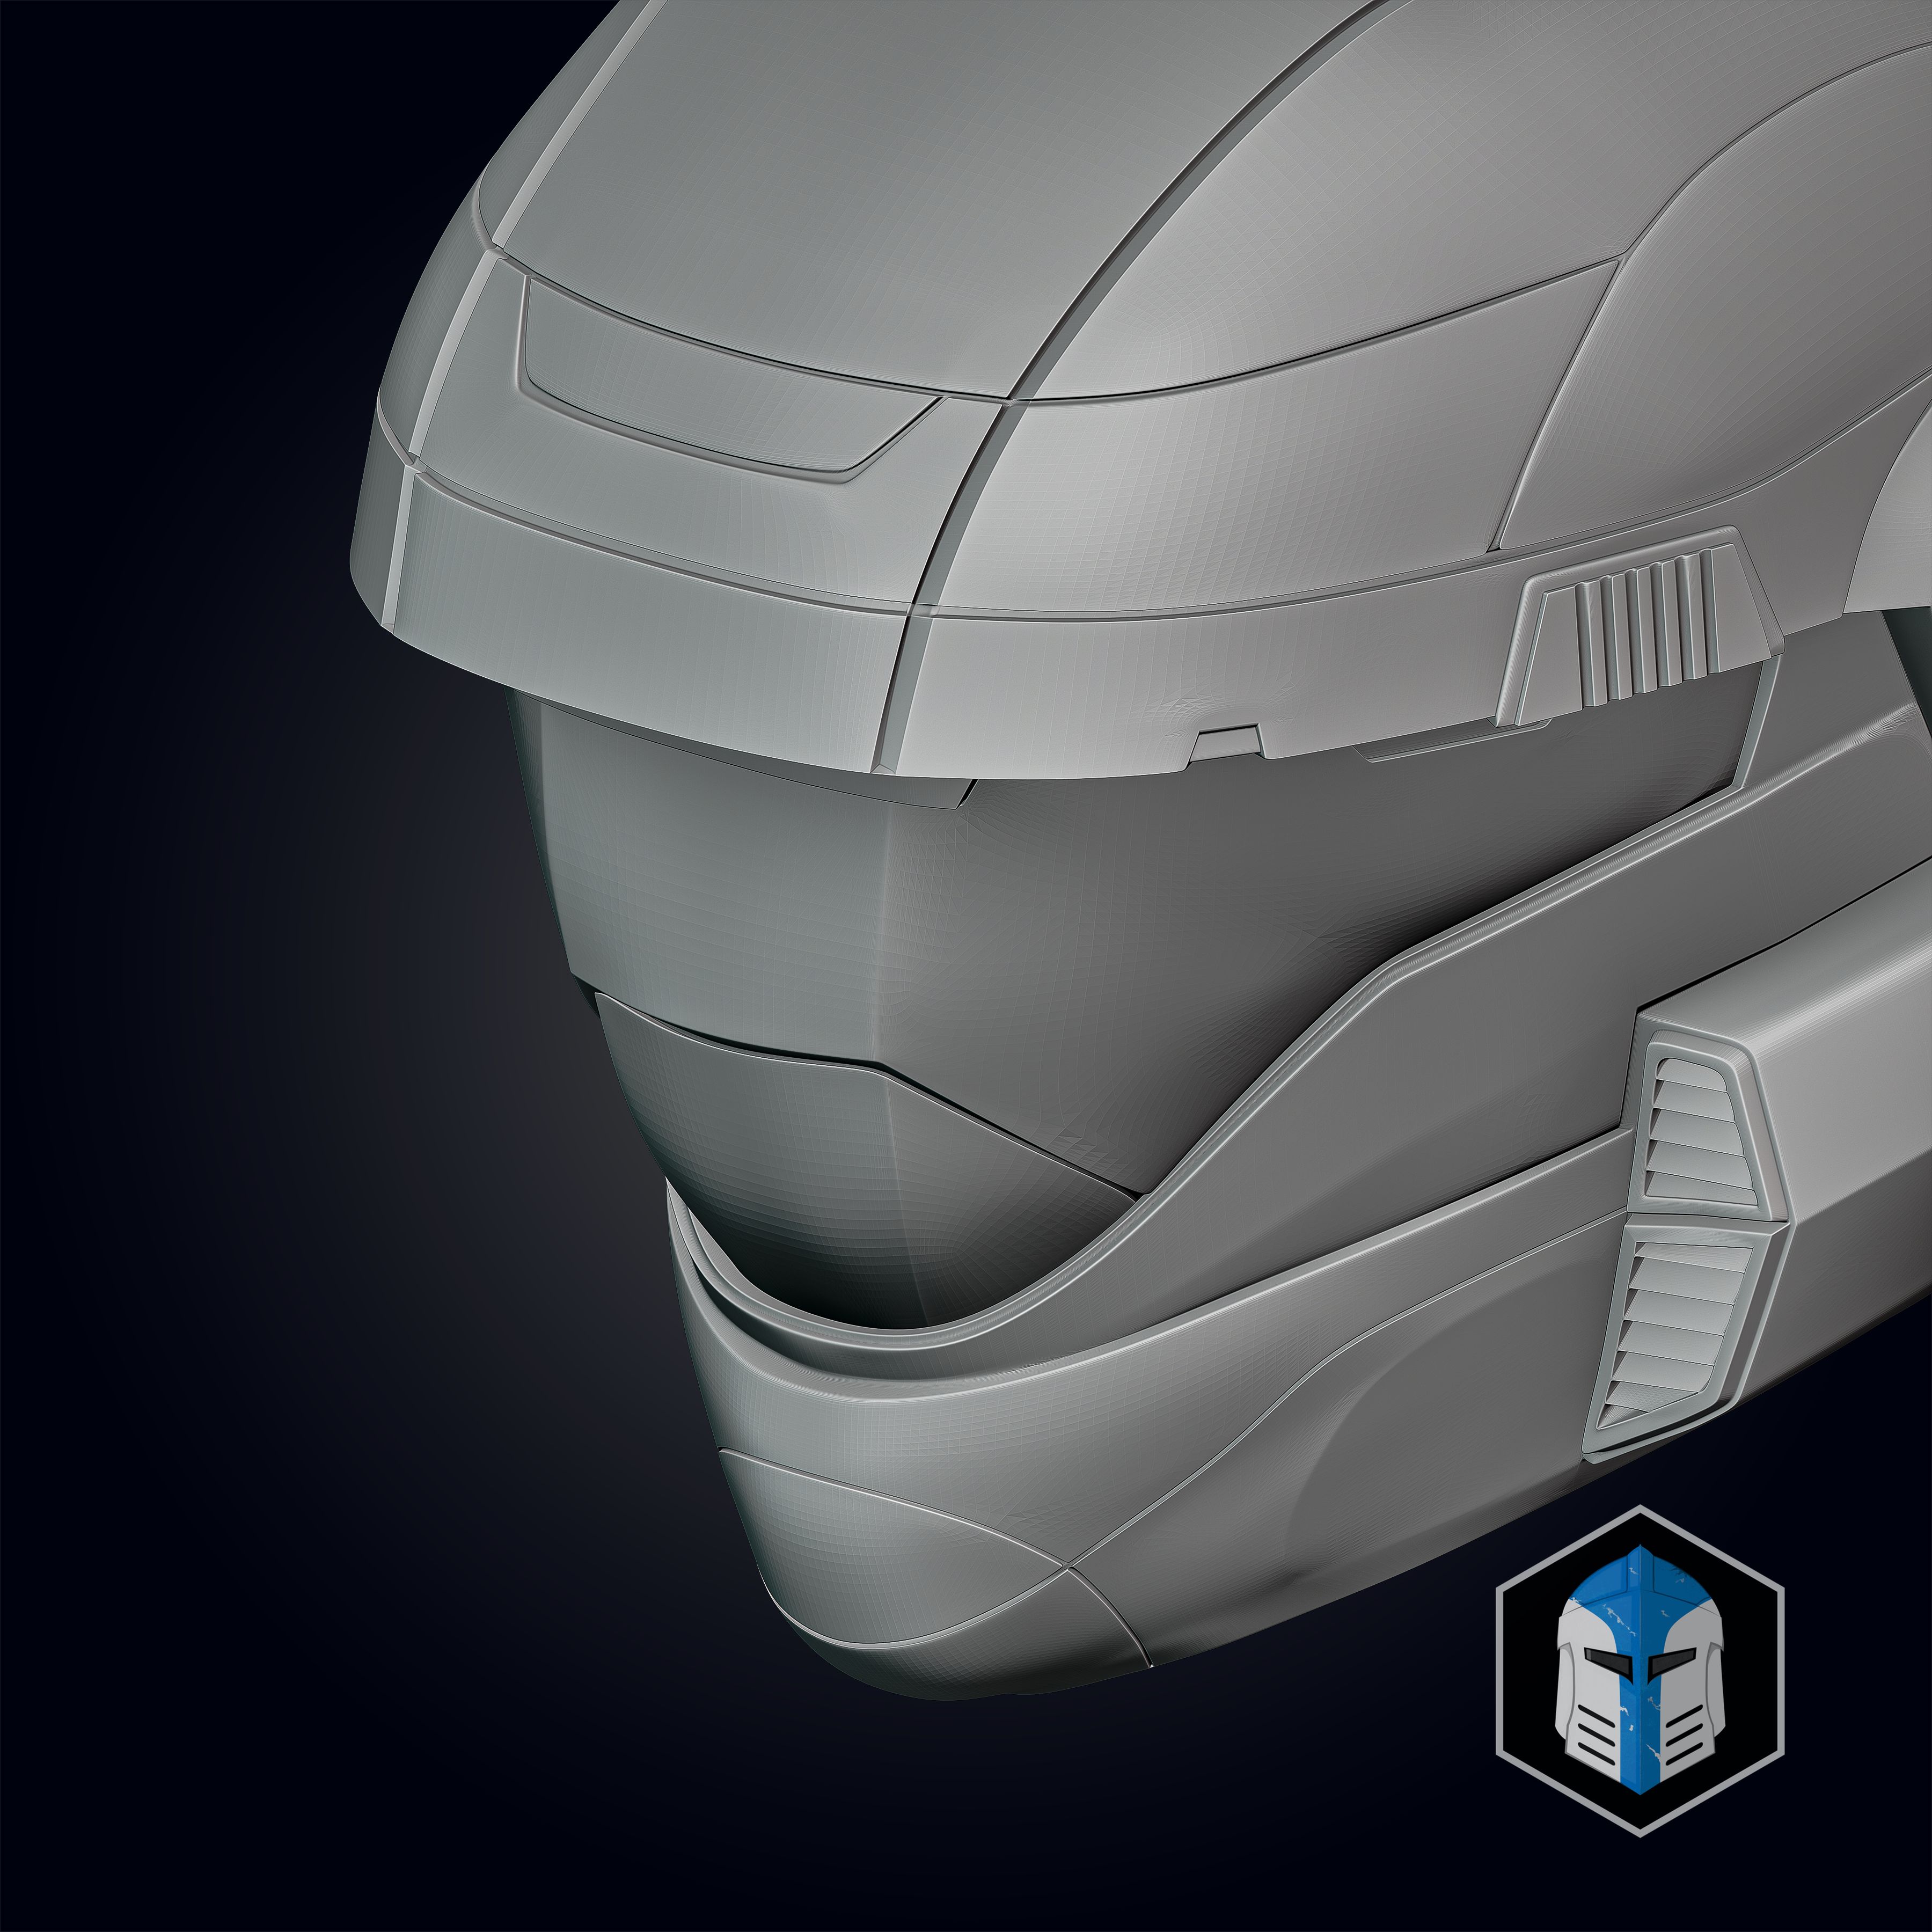 Halo Infinite ODST Helmet - 3D Print Files